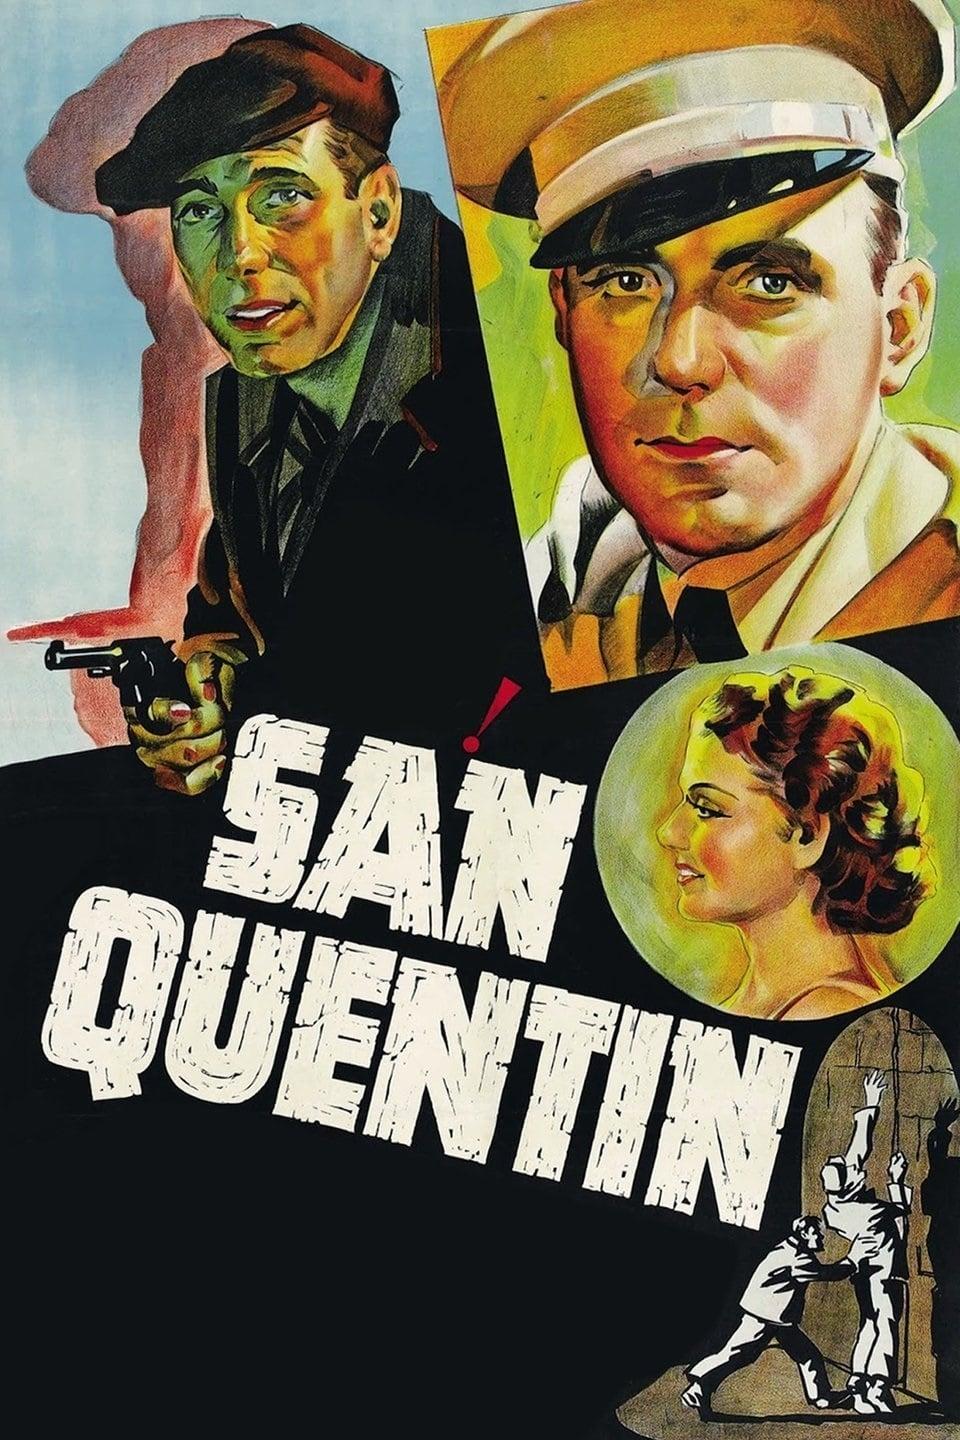 San Quentin poster